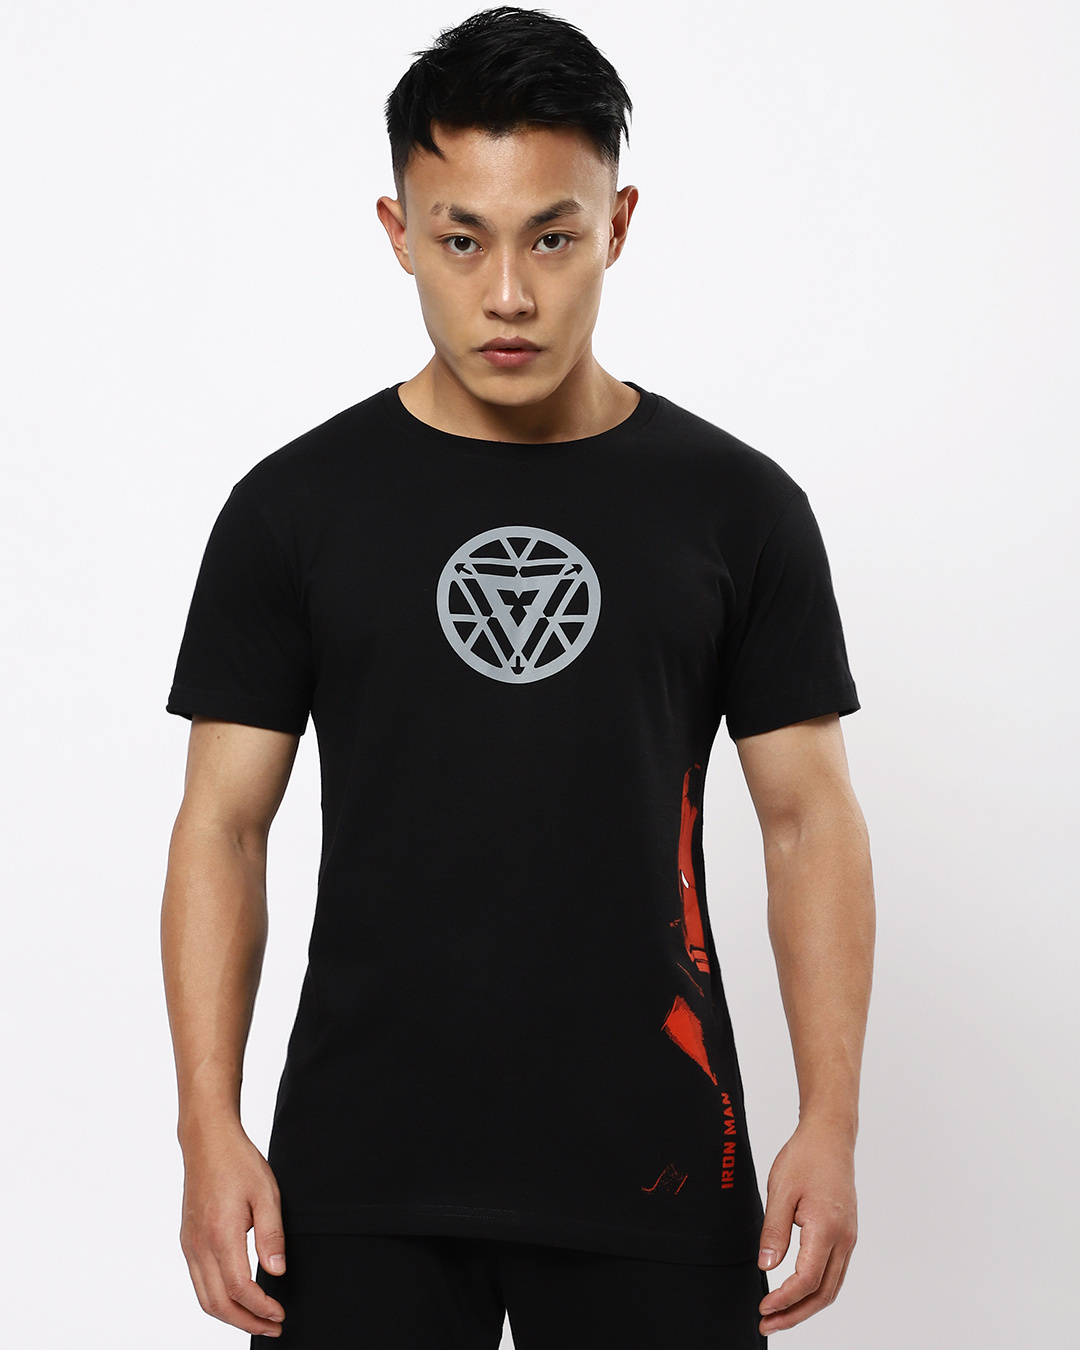 Buy Men's Black Iron Man Arc Reactor T-shirt Online at Bewakoof